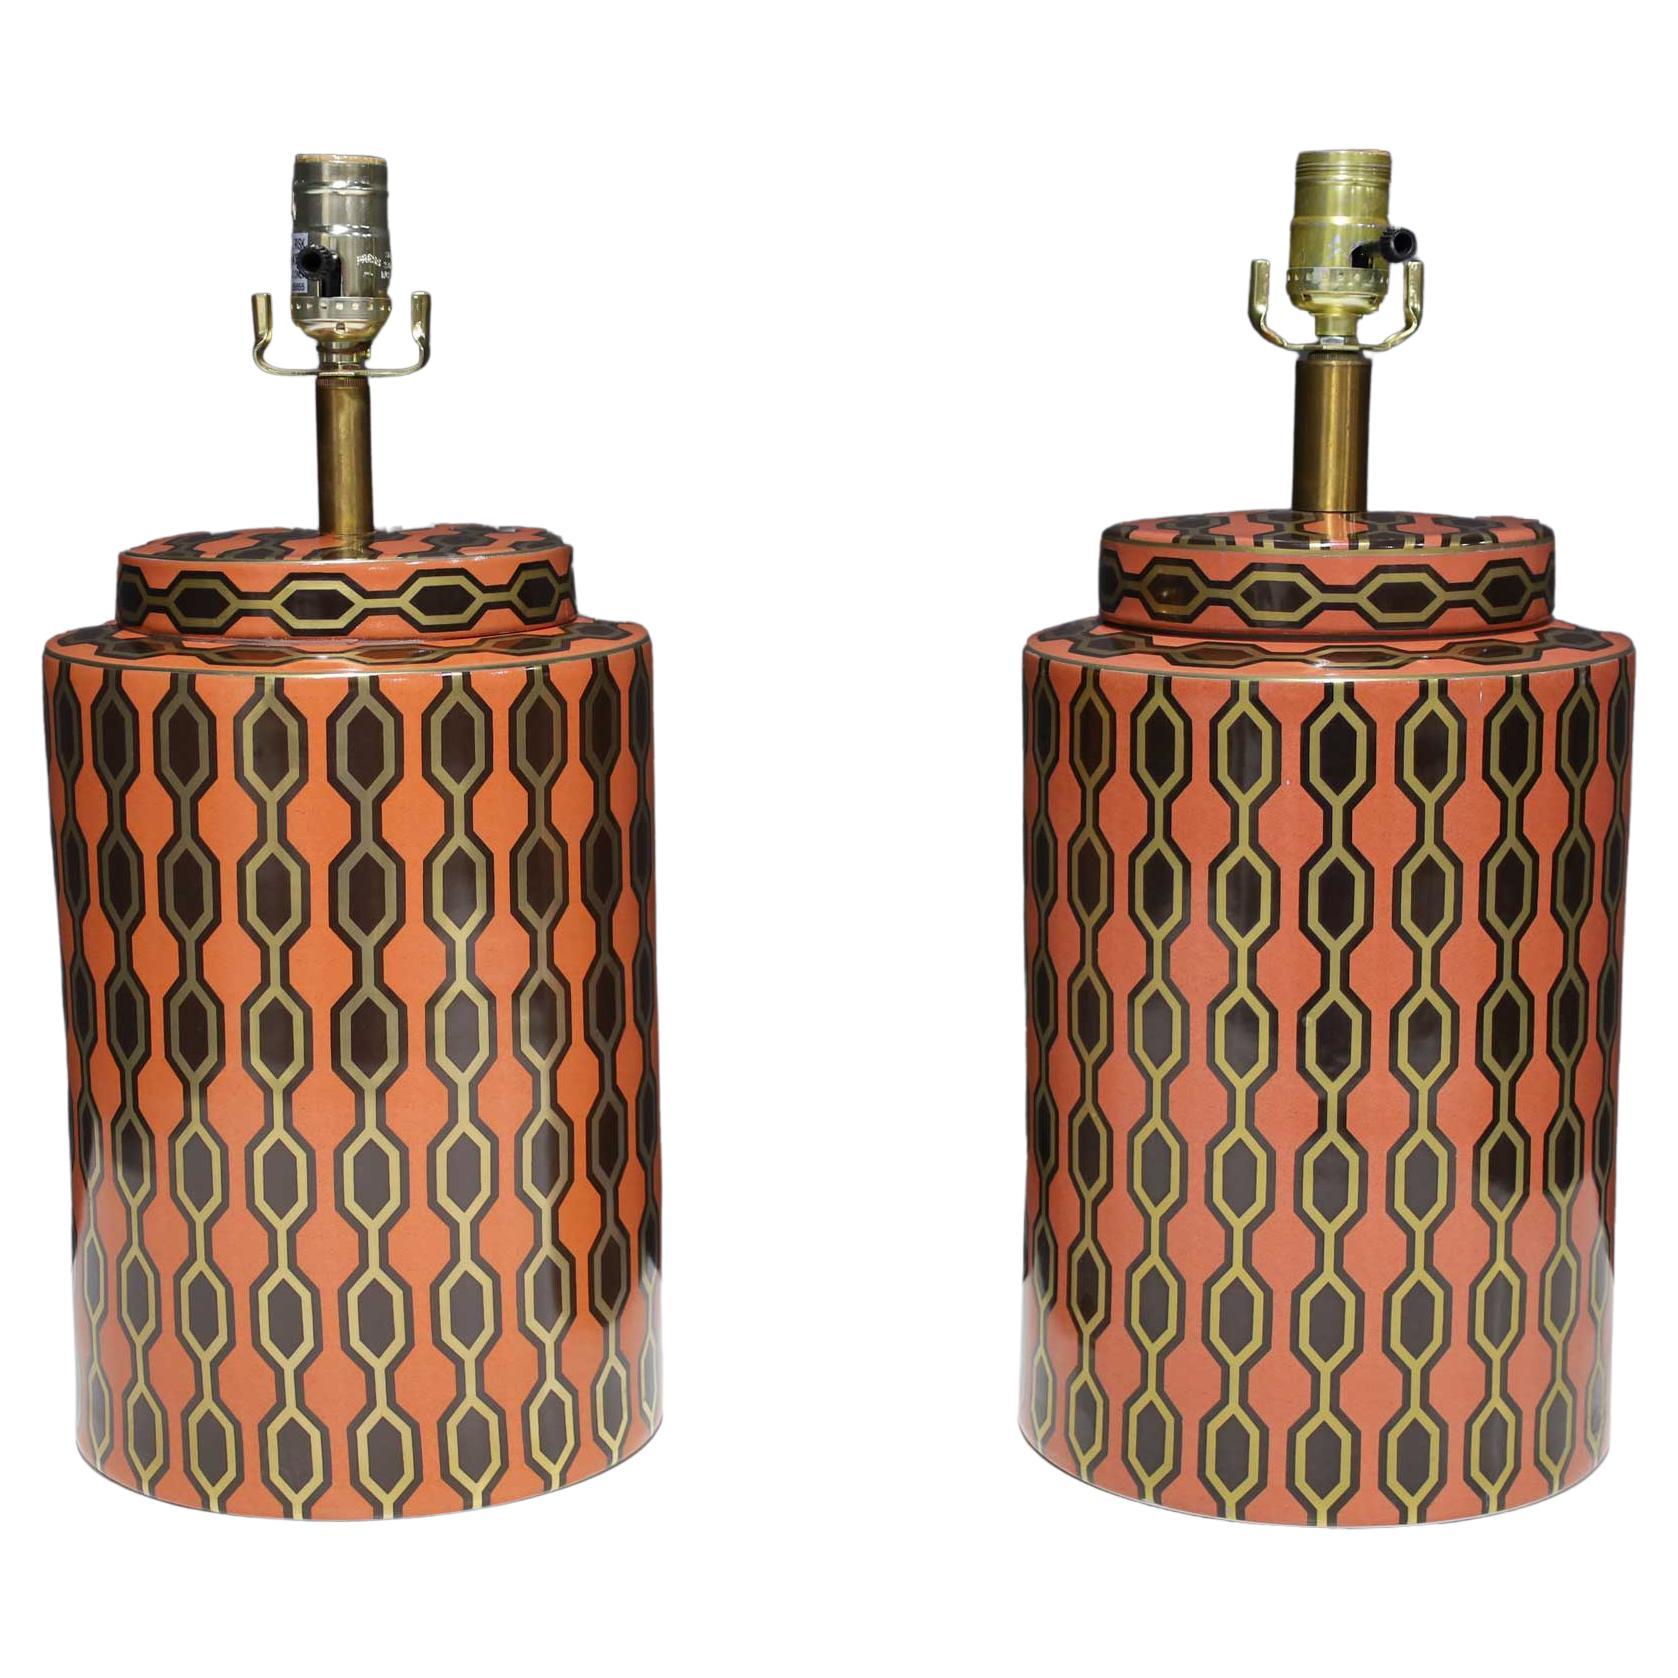 Kelly Hoppen Porcelain Tea Jar Lamps in Orange, Gold and Brown Geometric Pattern For Sale